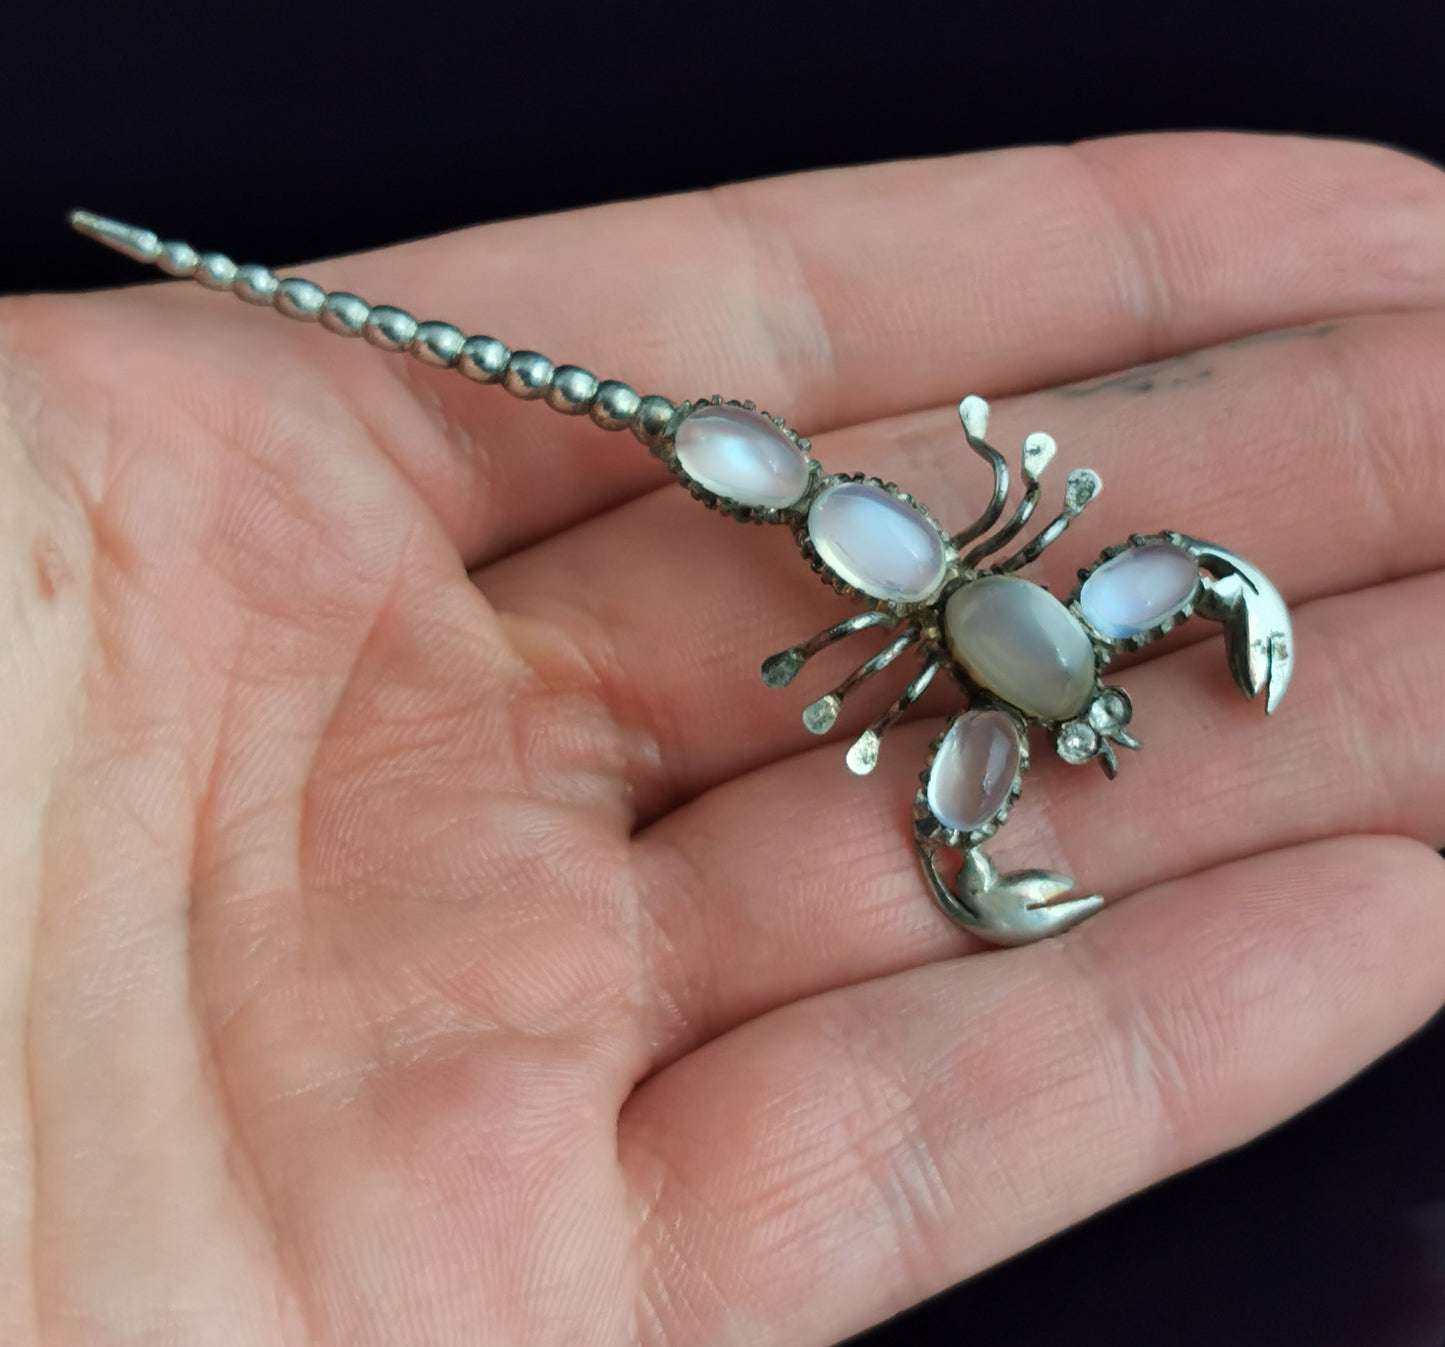 Antique Moonstone scorpion brooch sterling silver, Victorian